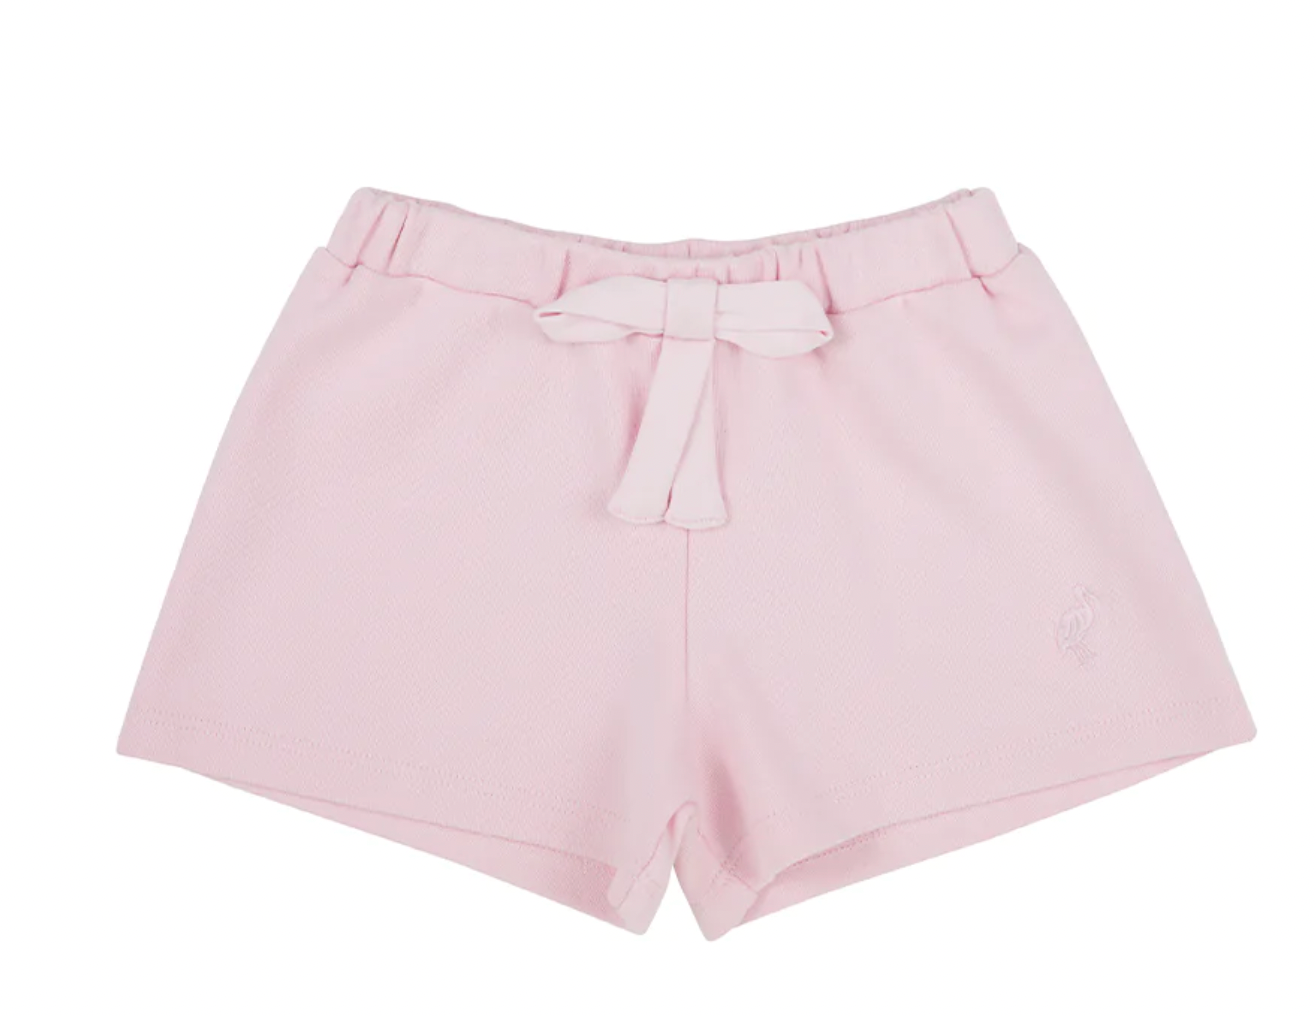 Shipley Shorts-Palm Beach Pink